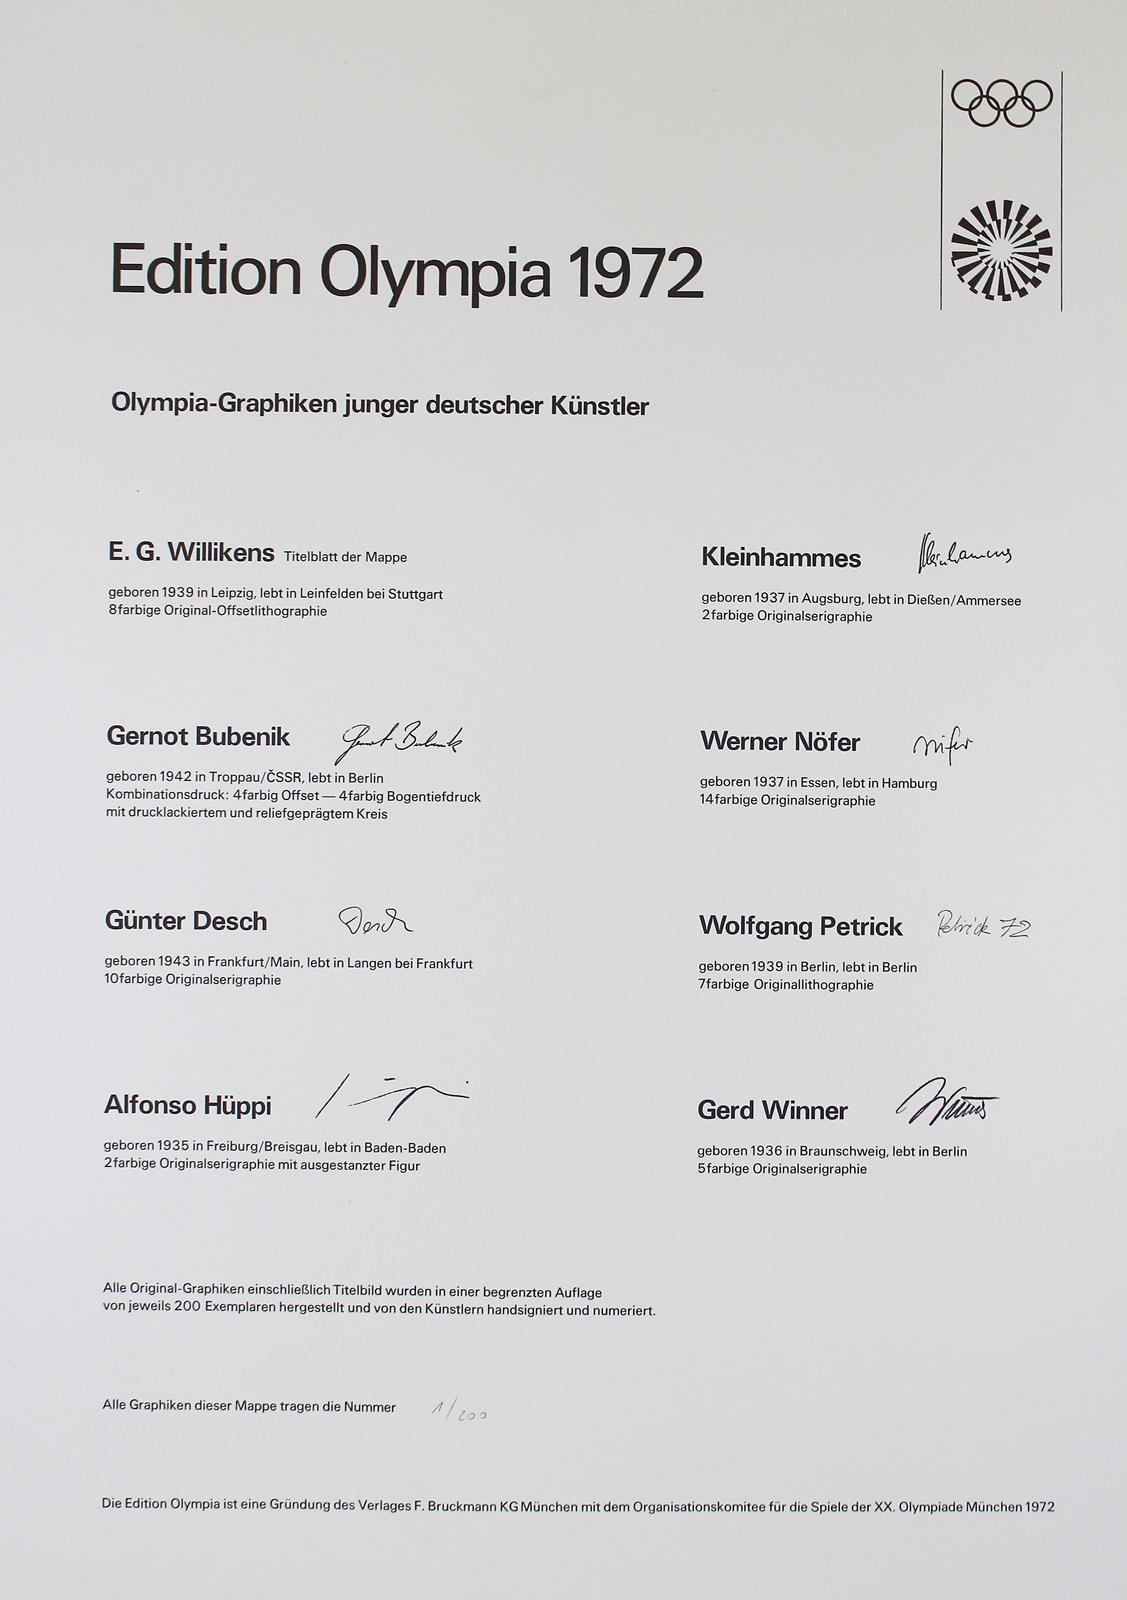 Edition Olympia 1972. | Bild Nr.3